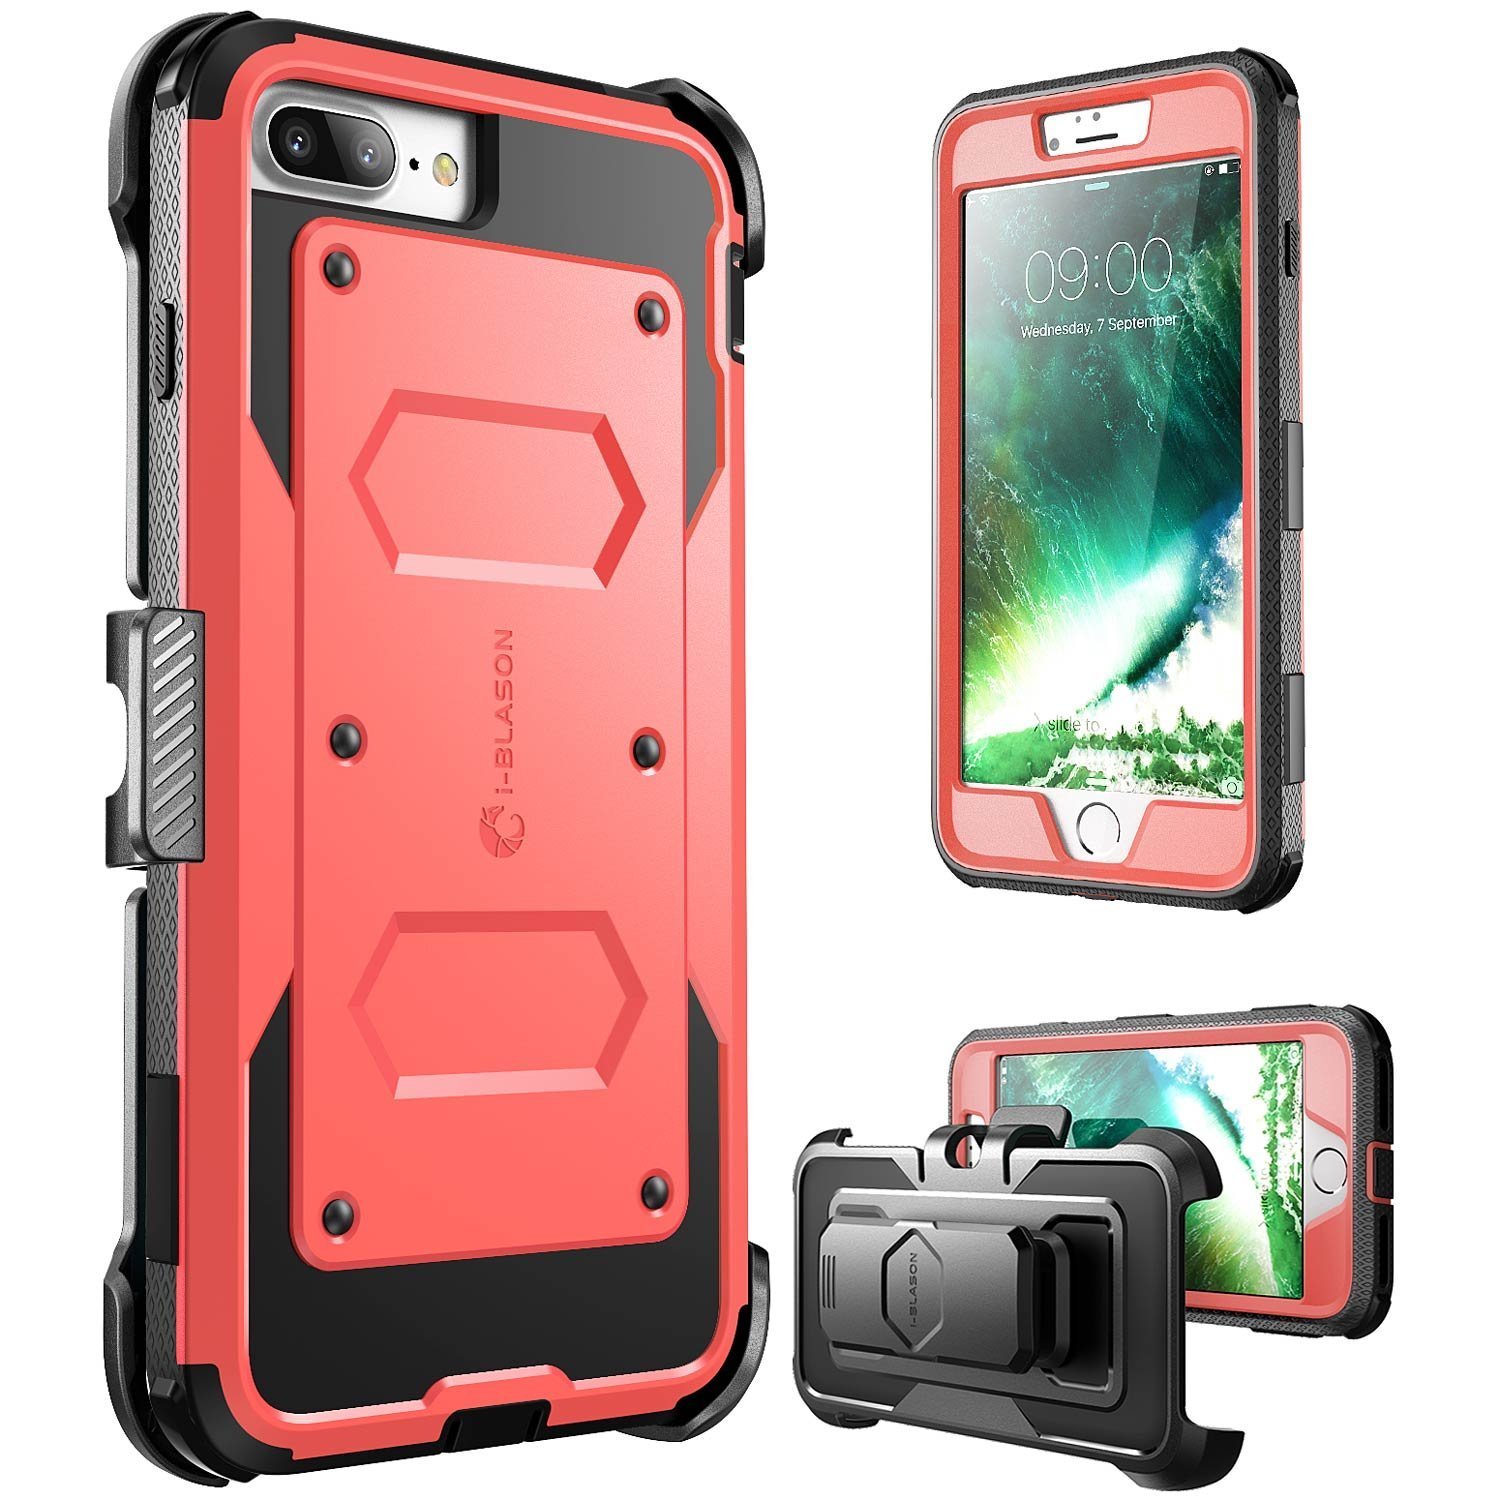 Iphone 7 Plus Case, iPhone 8 Plus Case, Armorbox i-Blason-Pink